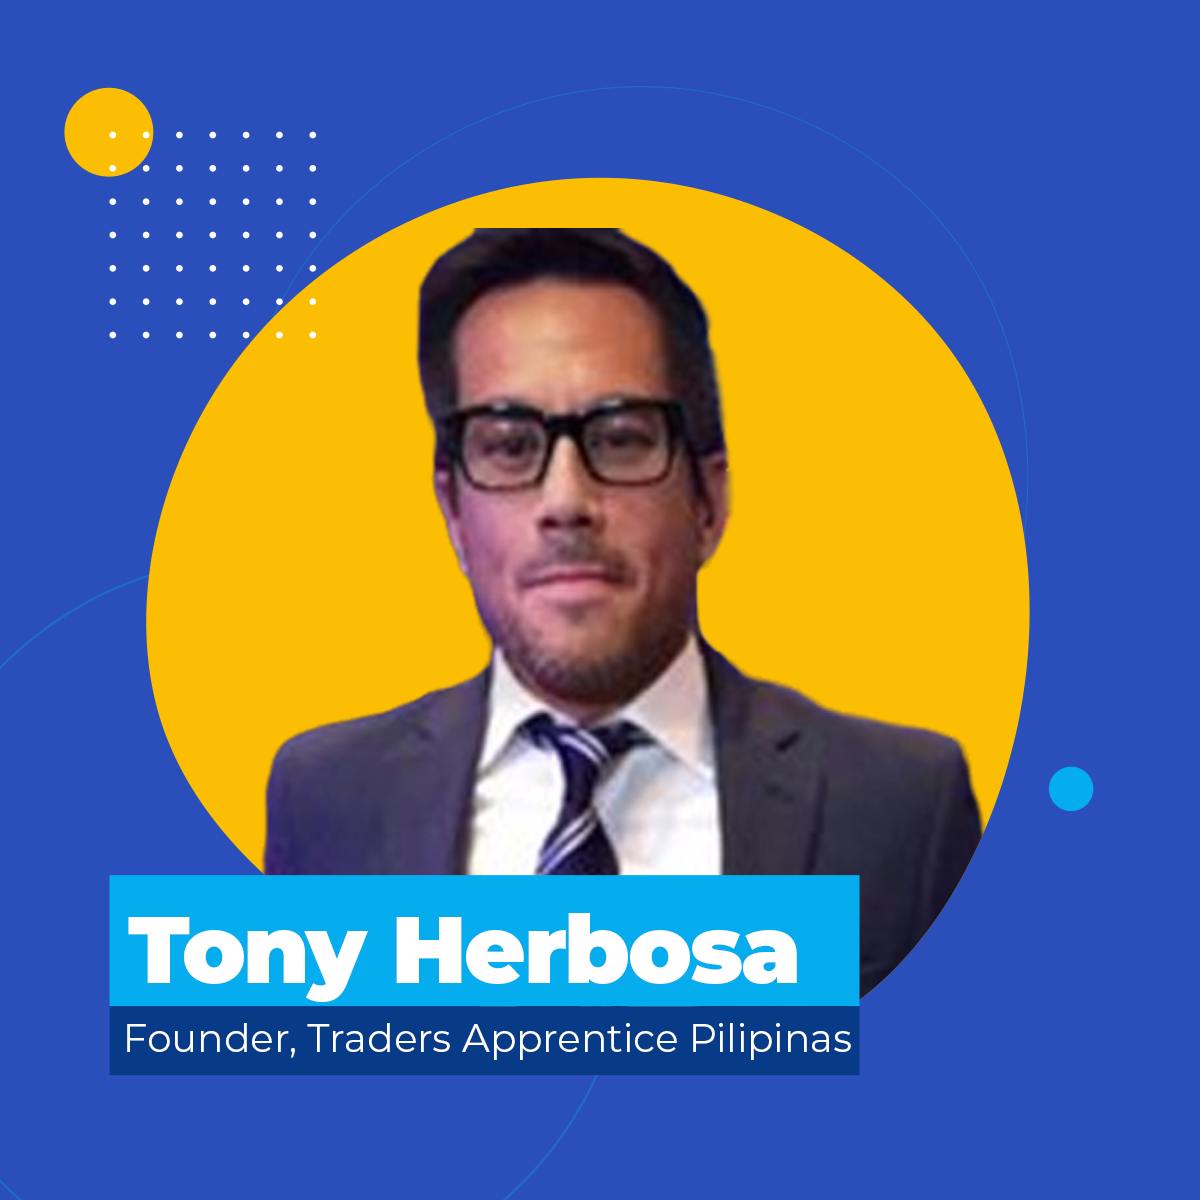 Tony Herbosa